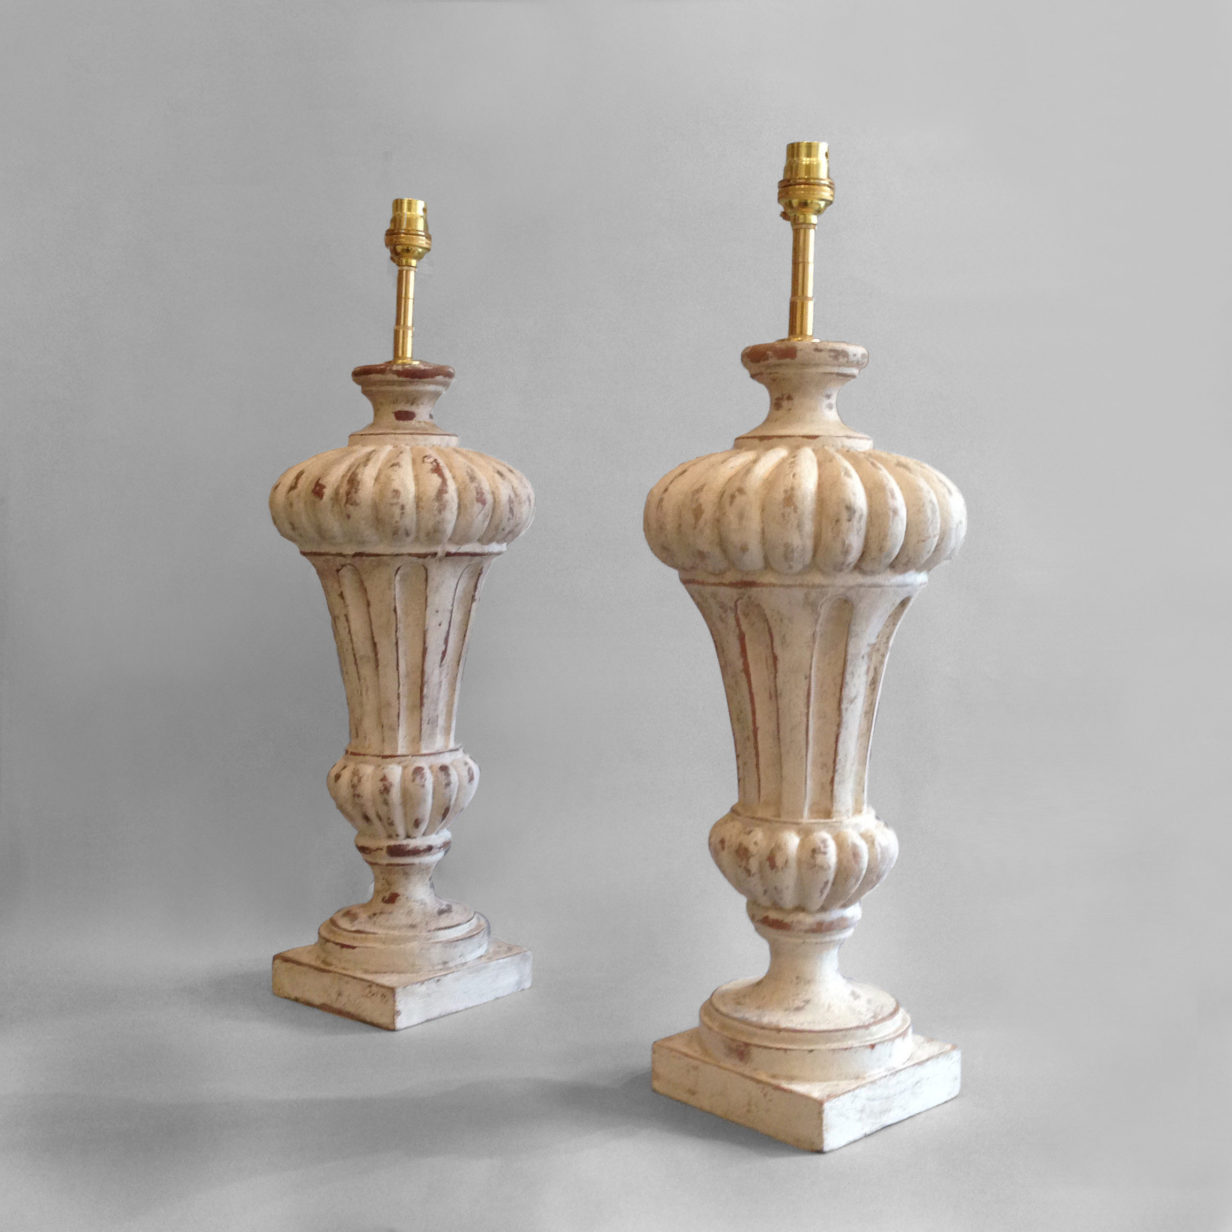 A pair of chambord lamp bases